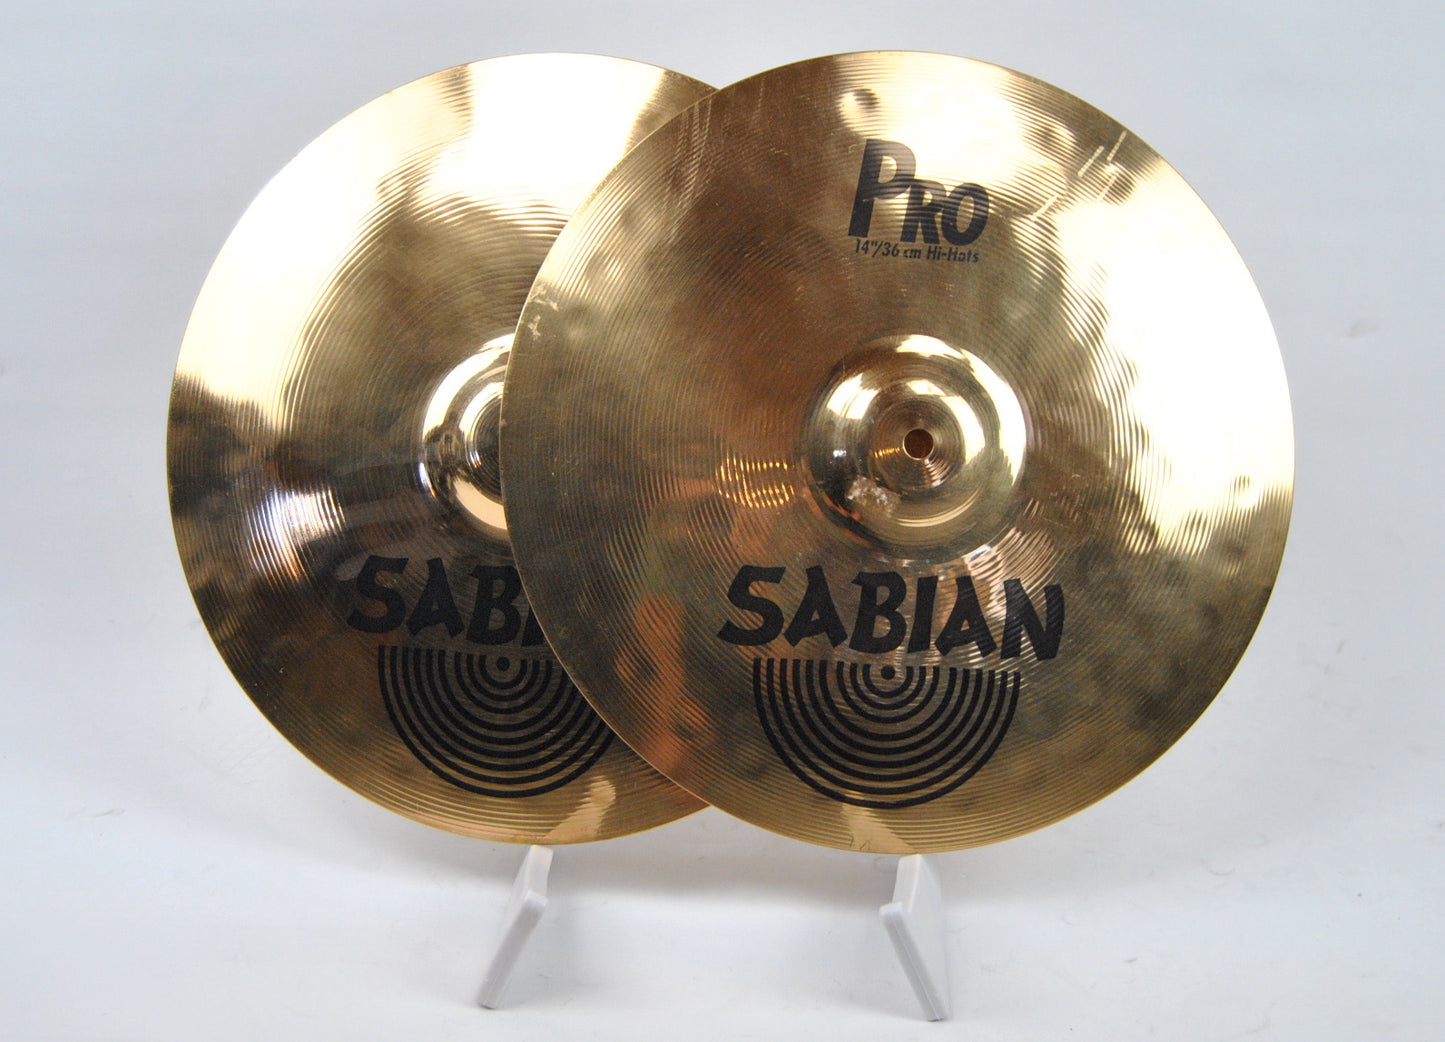 Sabian Pro 14“ Hi-Hat